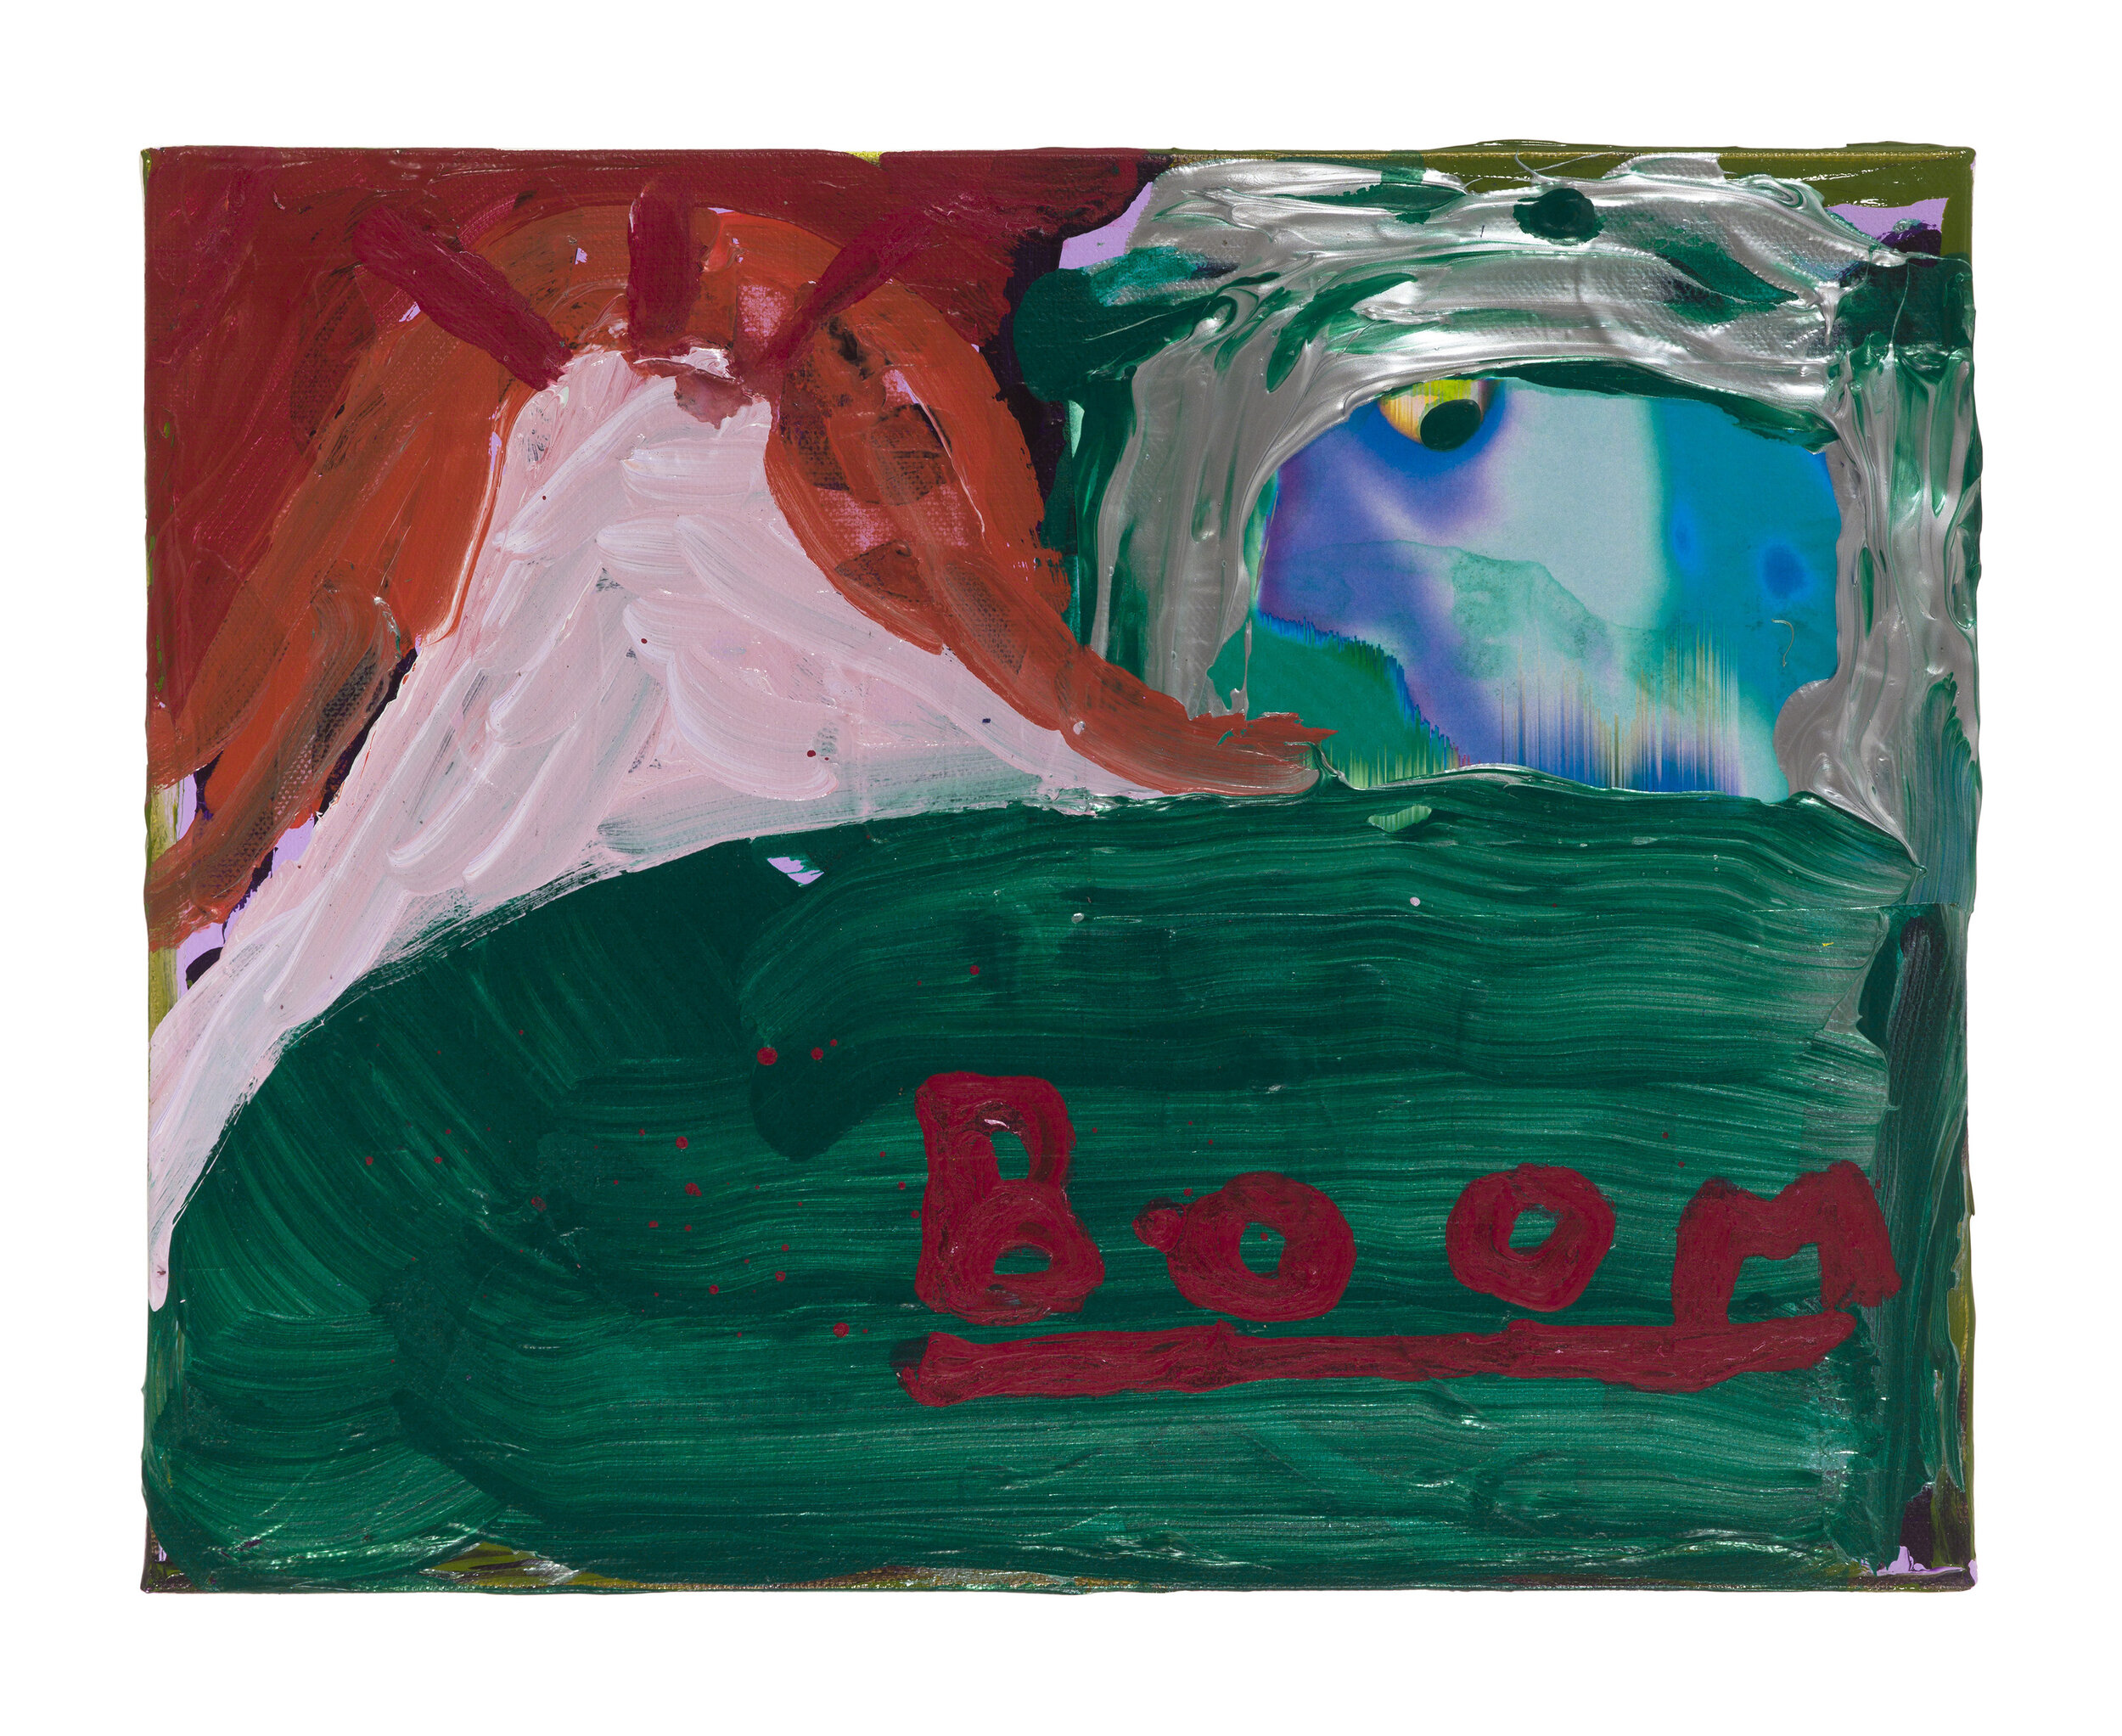  Drew Beattie and Ben Shepard  Volcano Boom   2019 acrylic on canvas 11 x 14 inches 